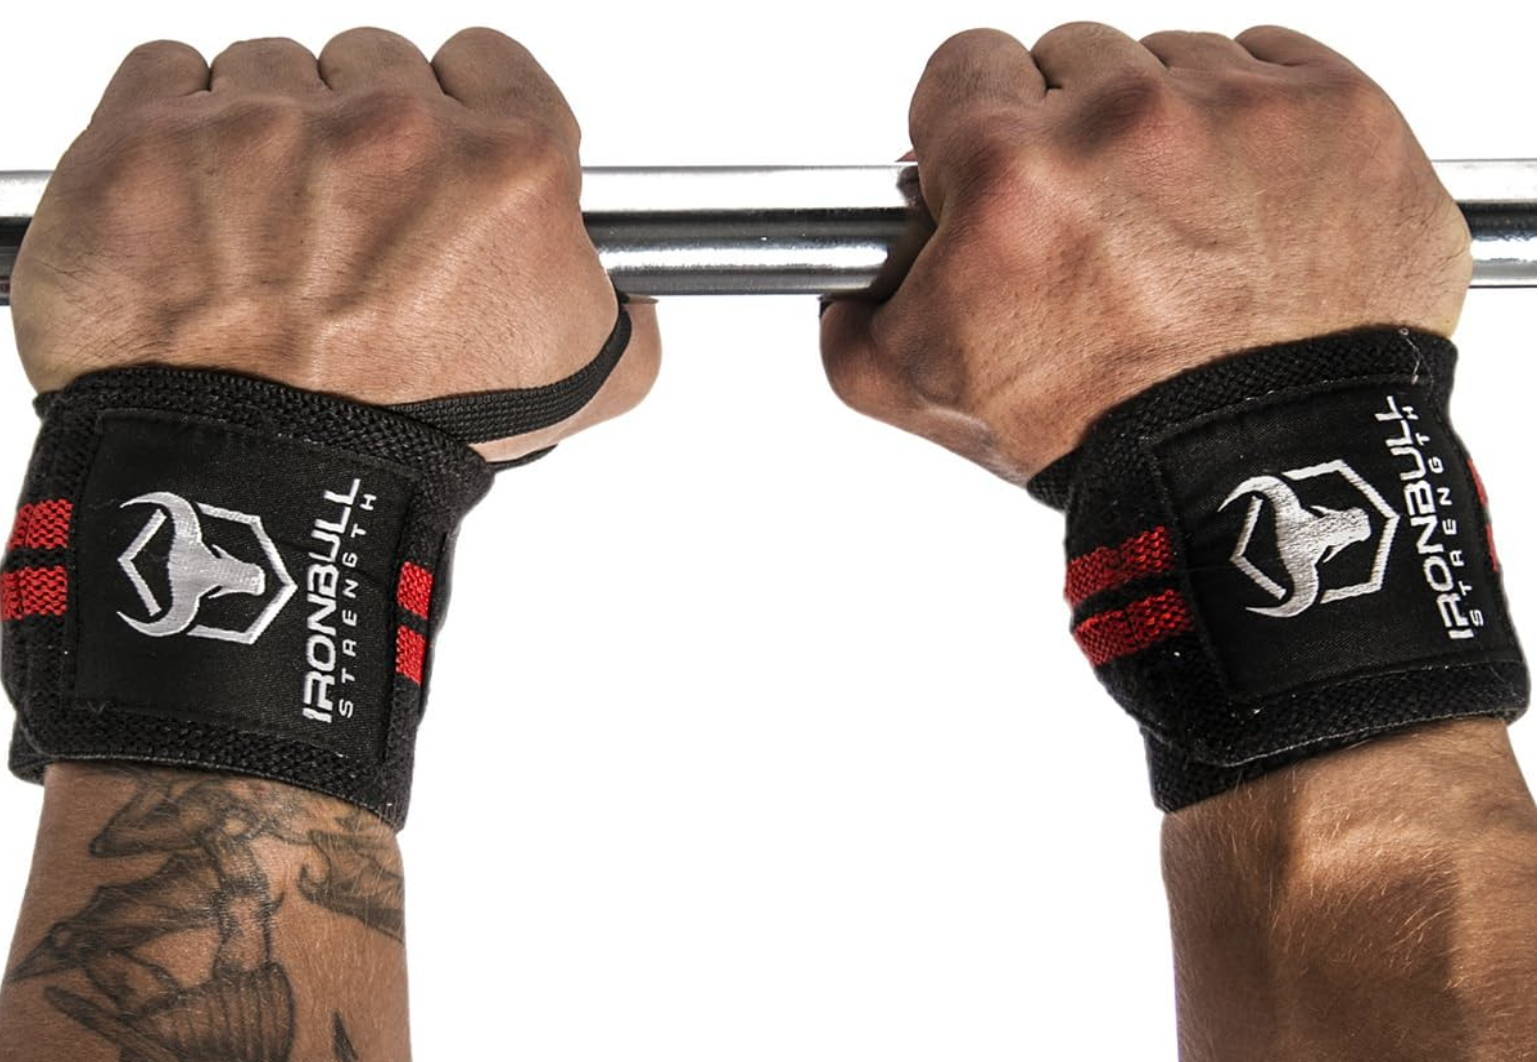 Iron Bull Strength Wrist Wraps